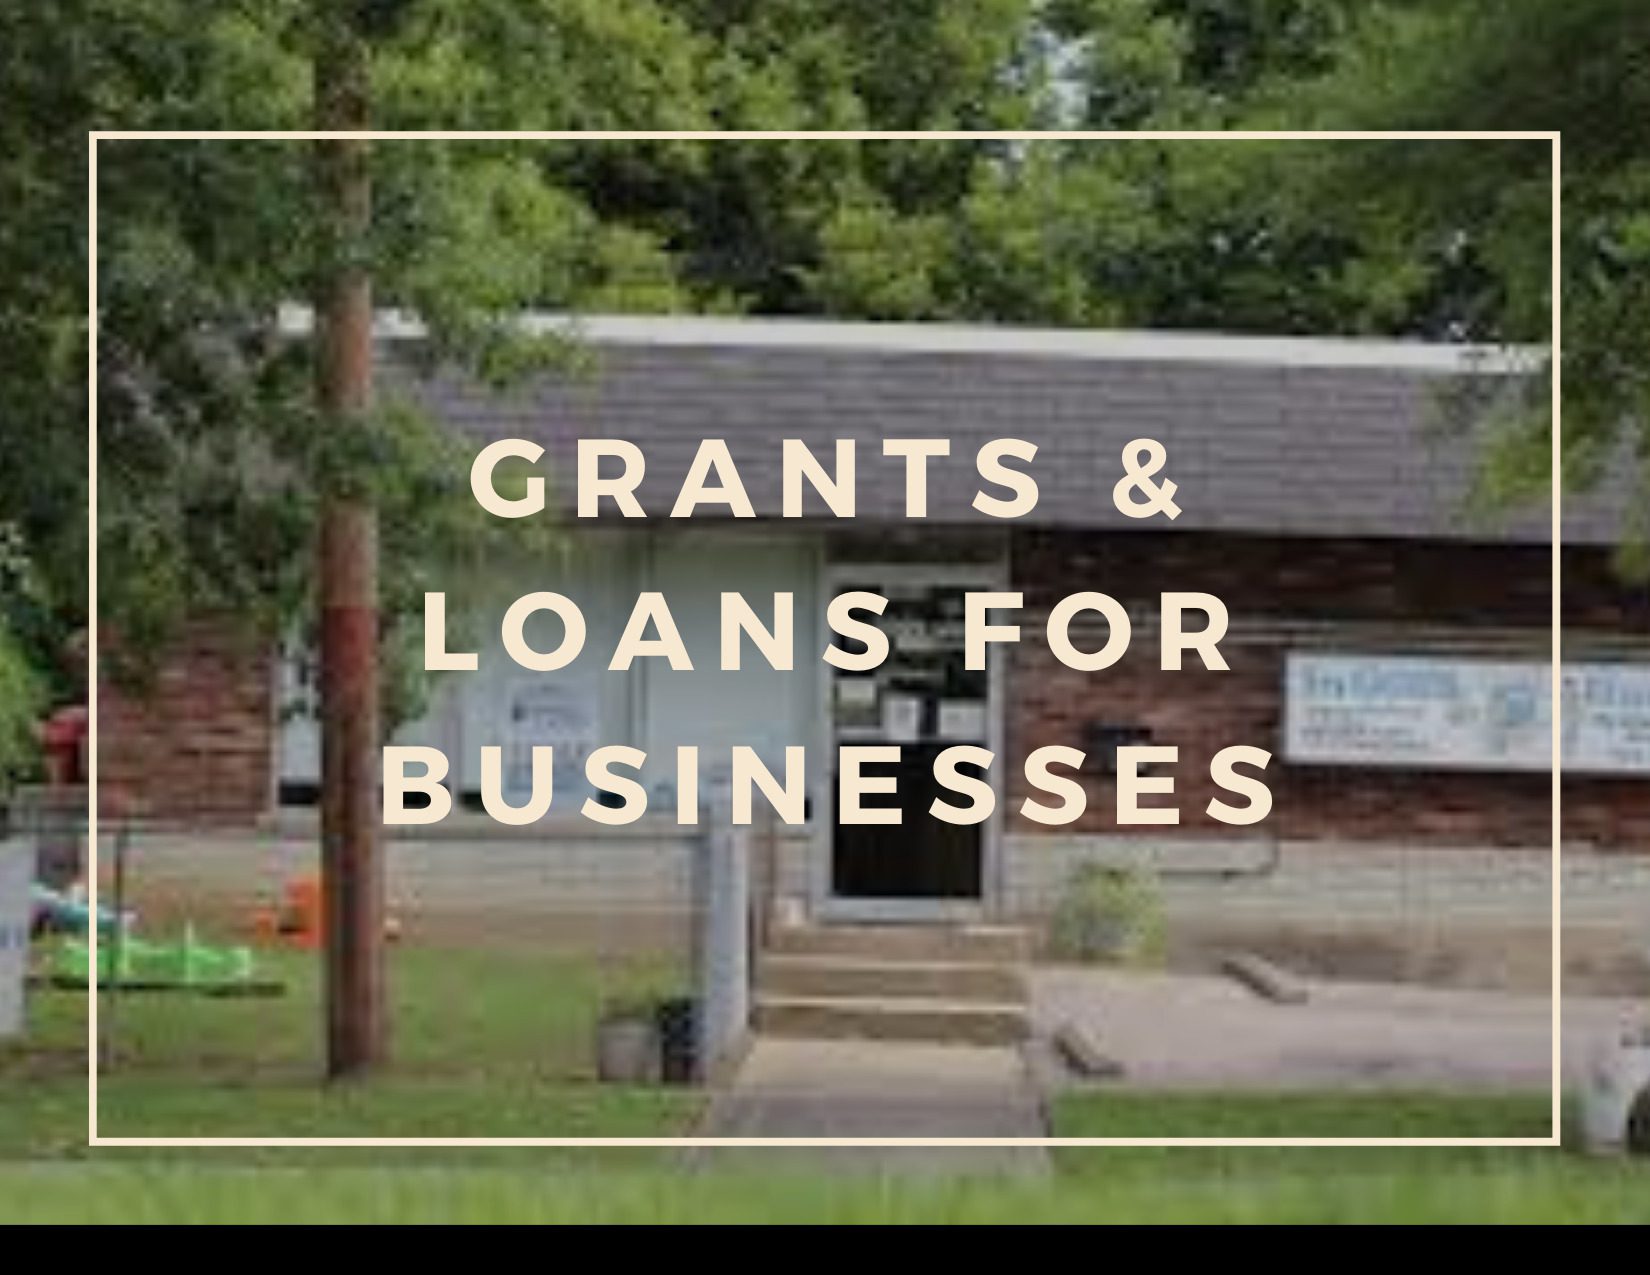 Grants & Loans for businesses